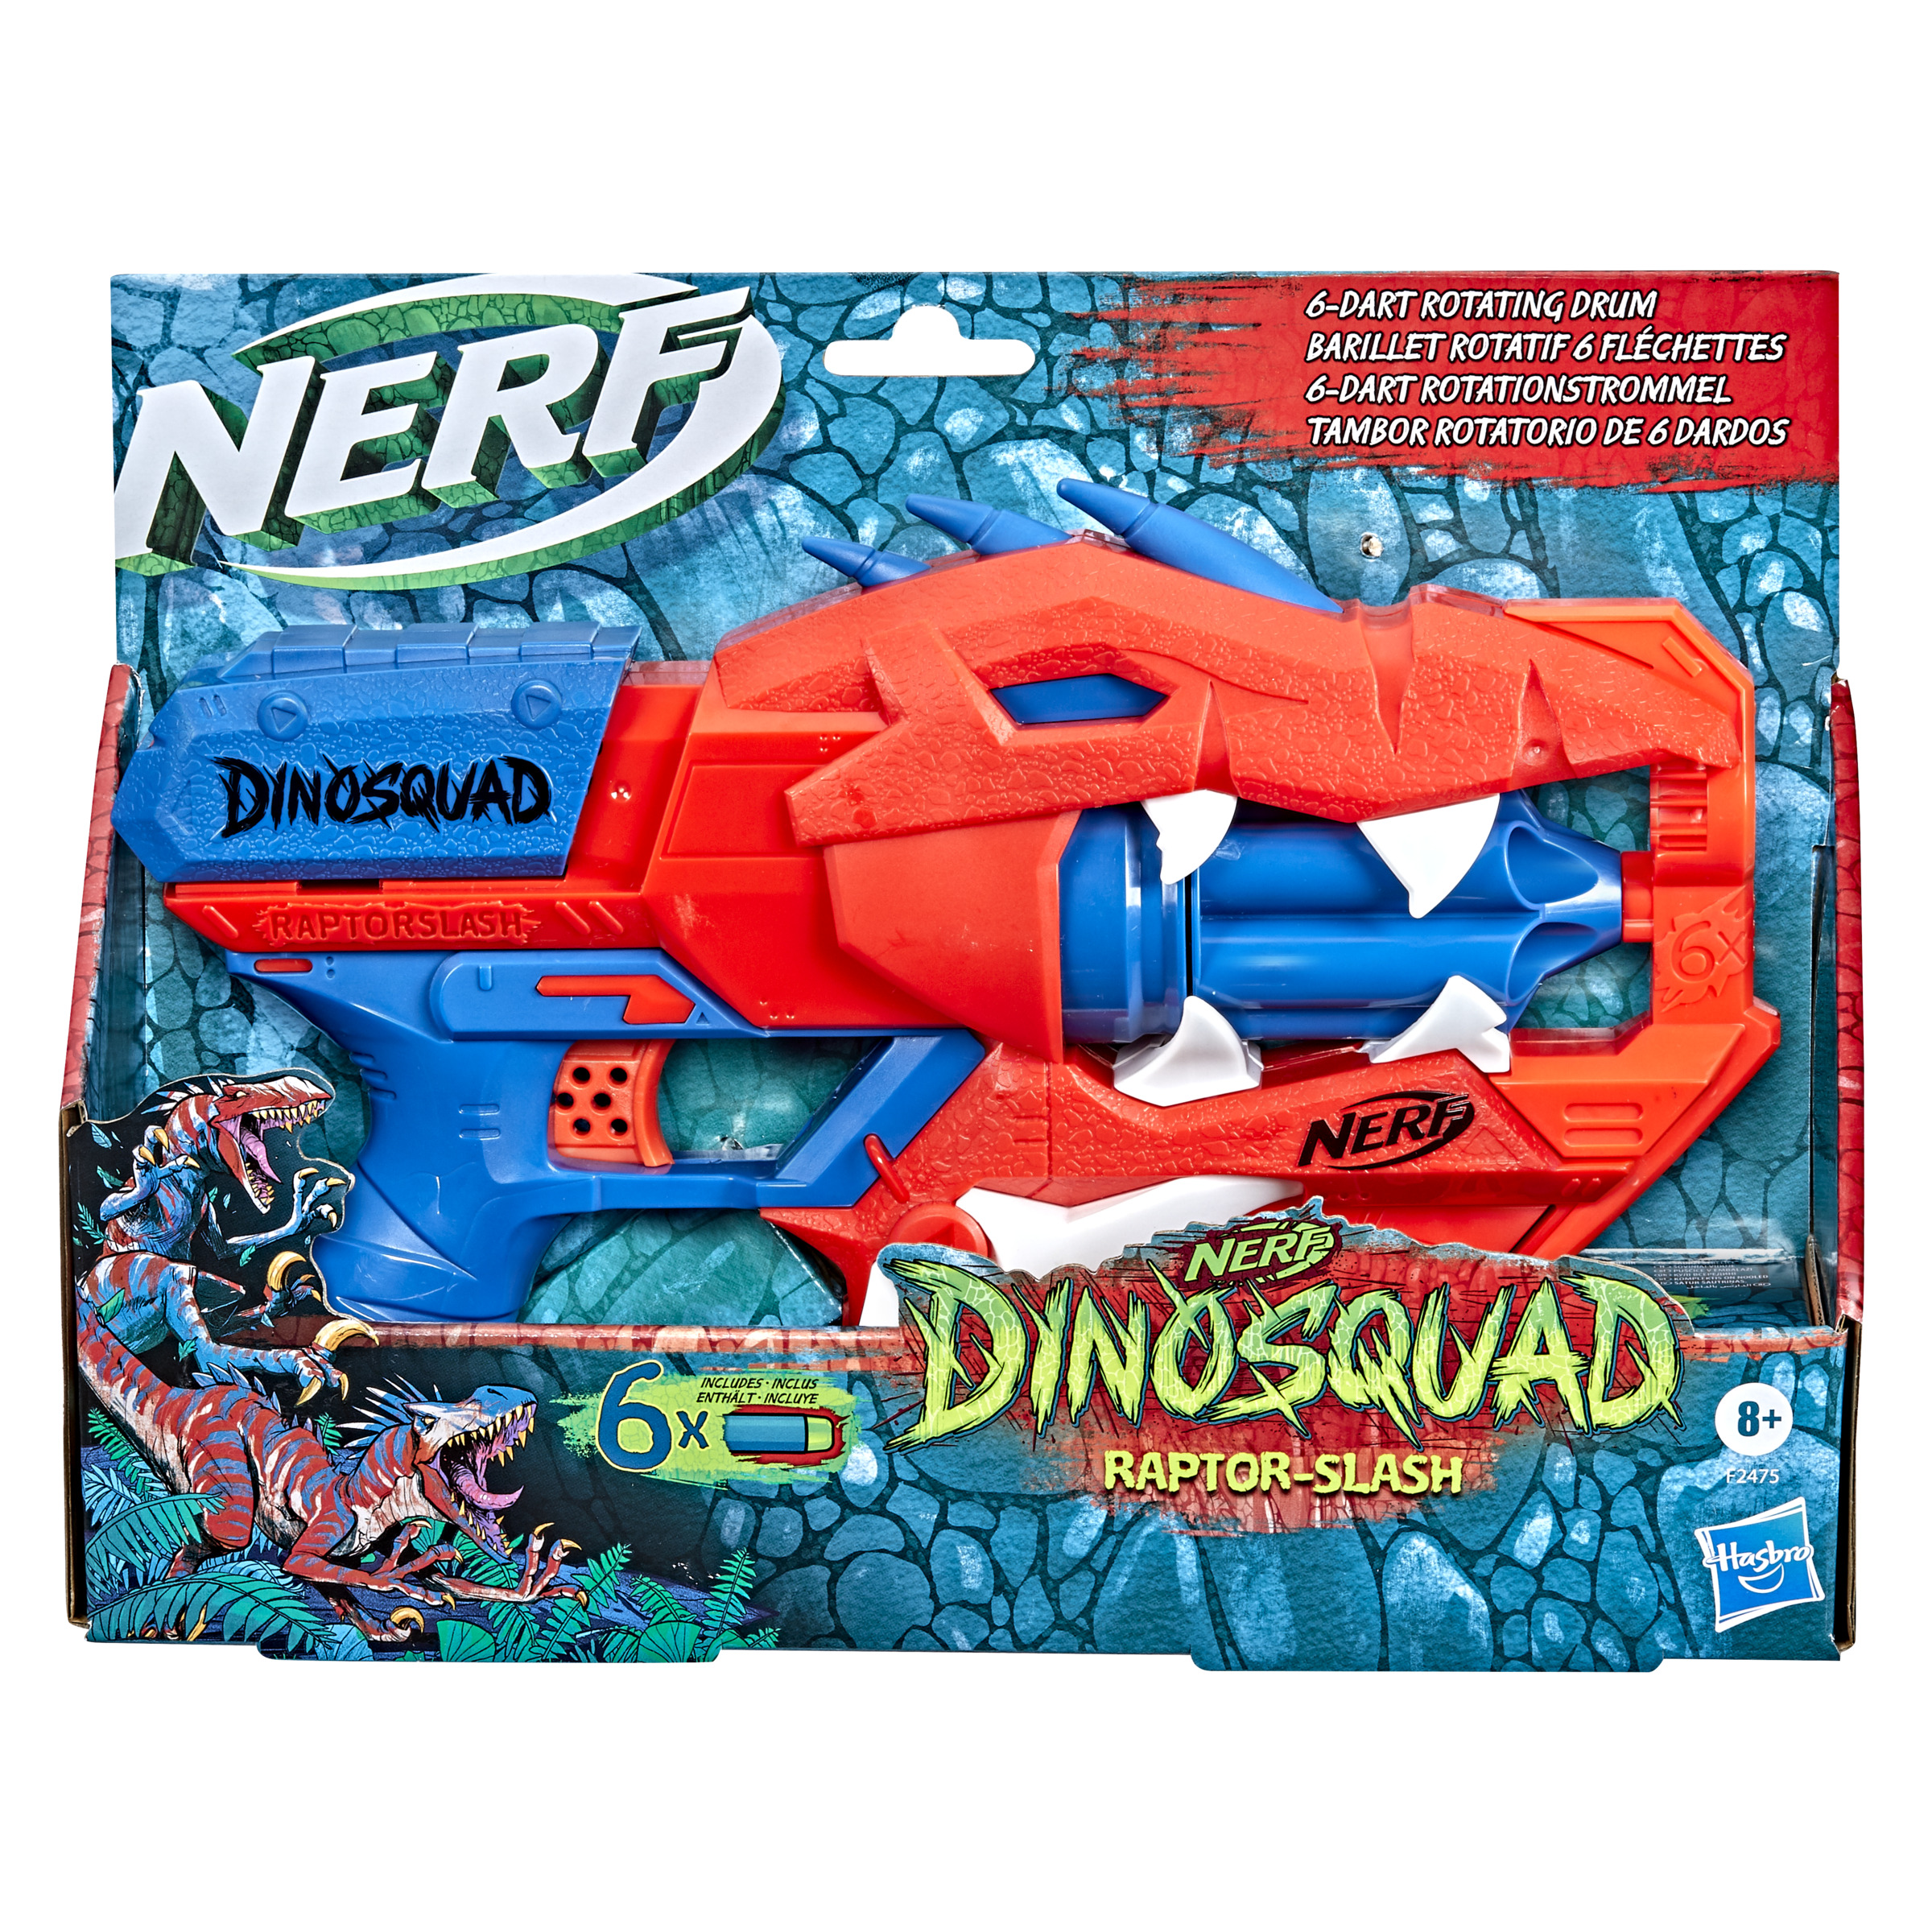 Lanzador Nerf Dinosquad Raptor-slash